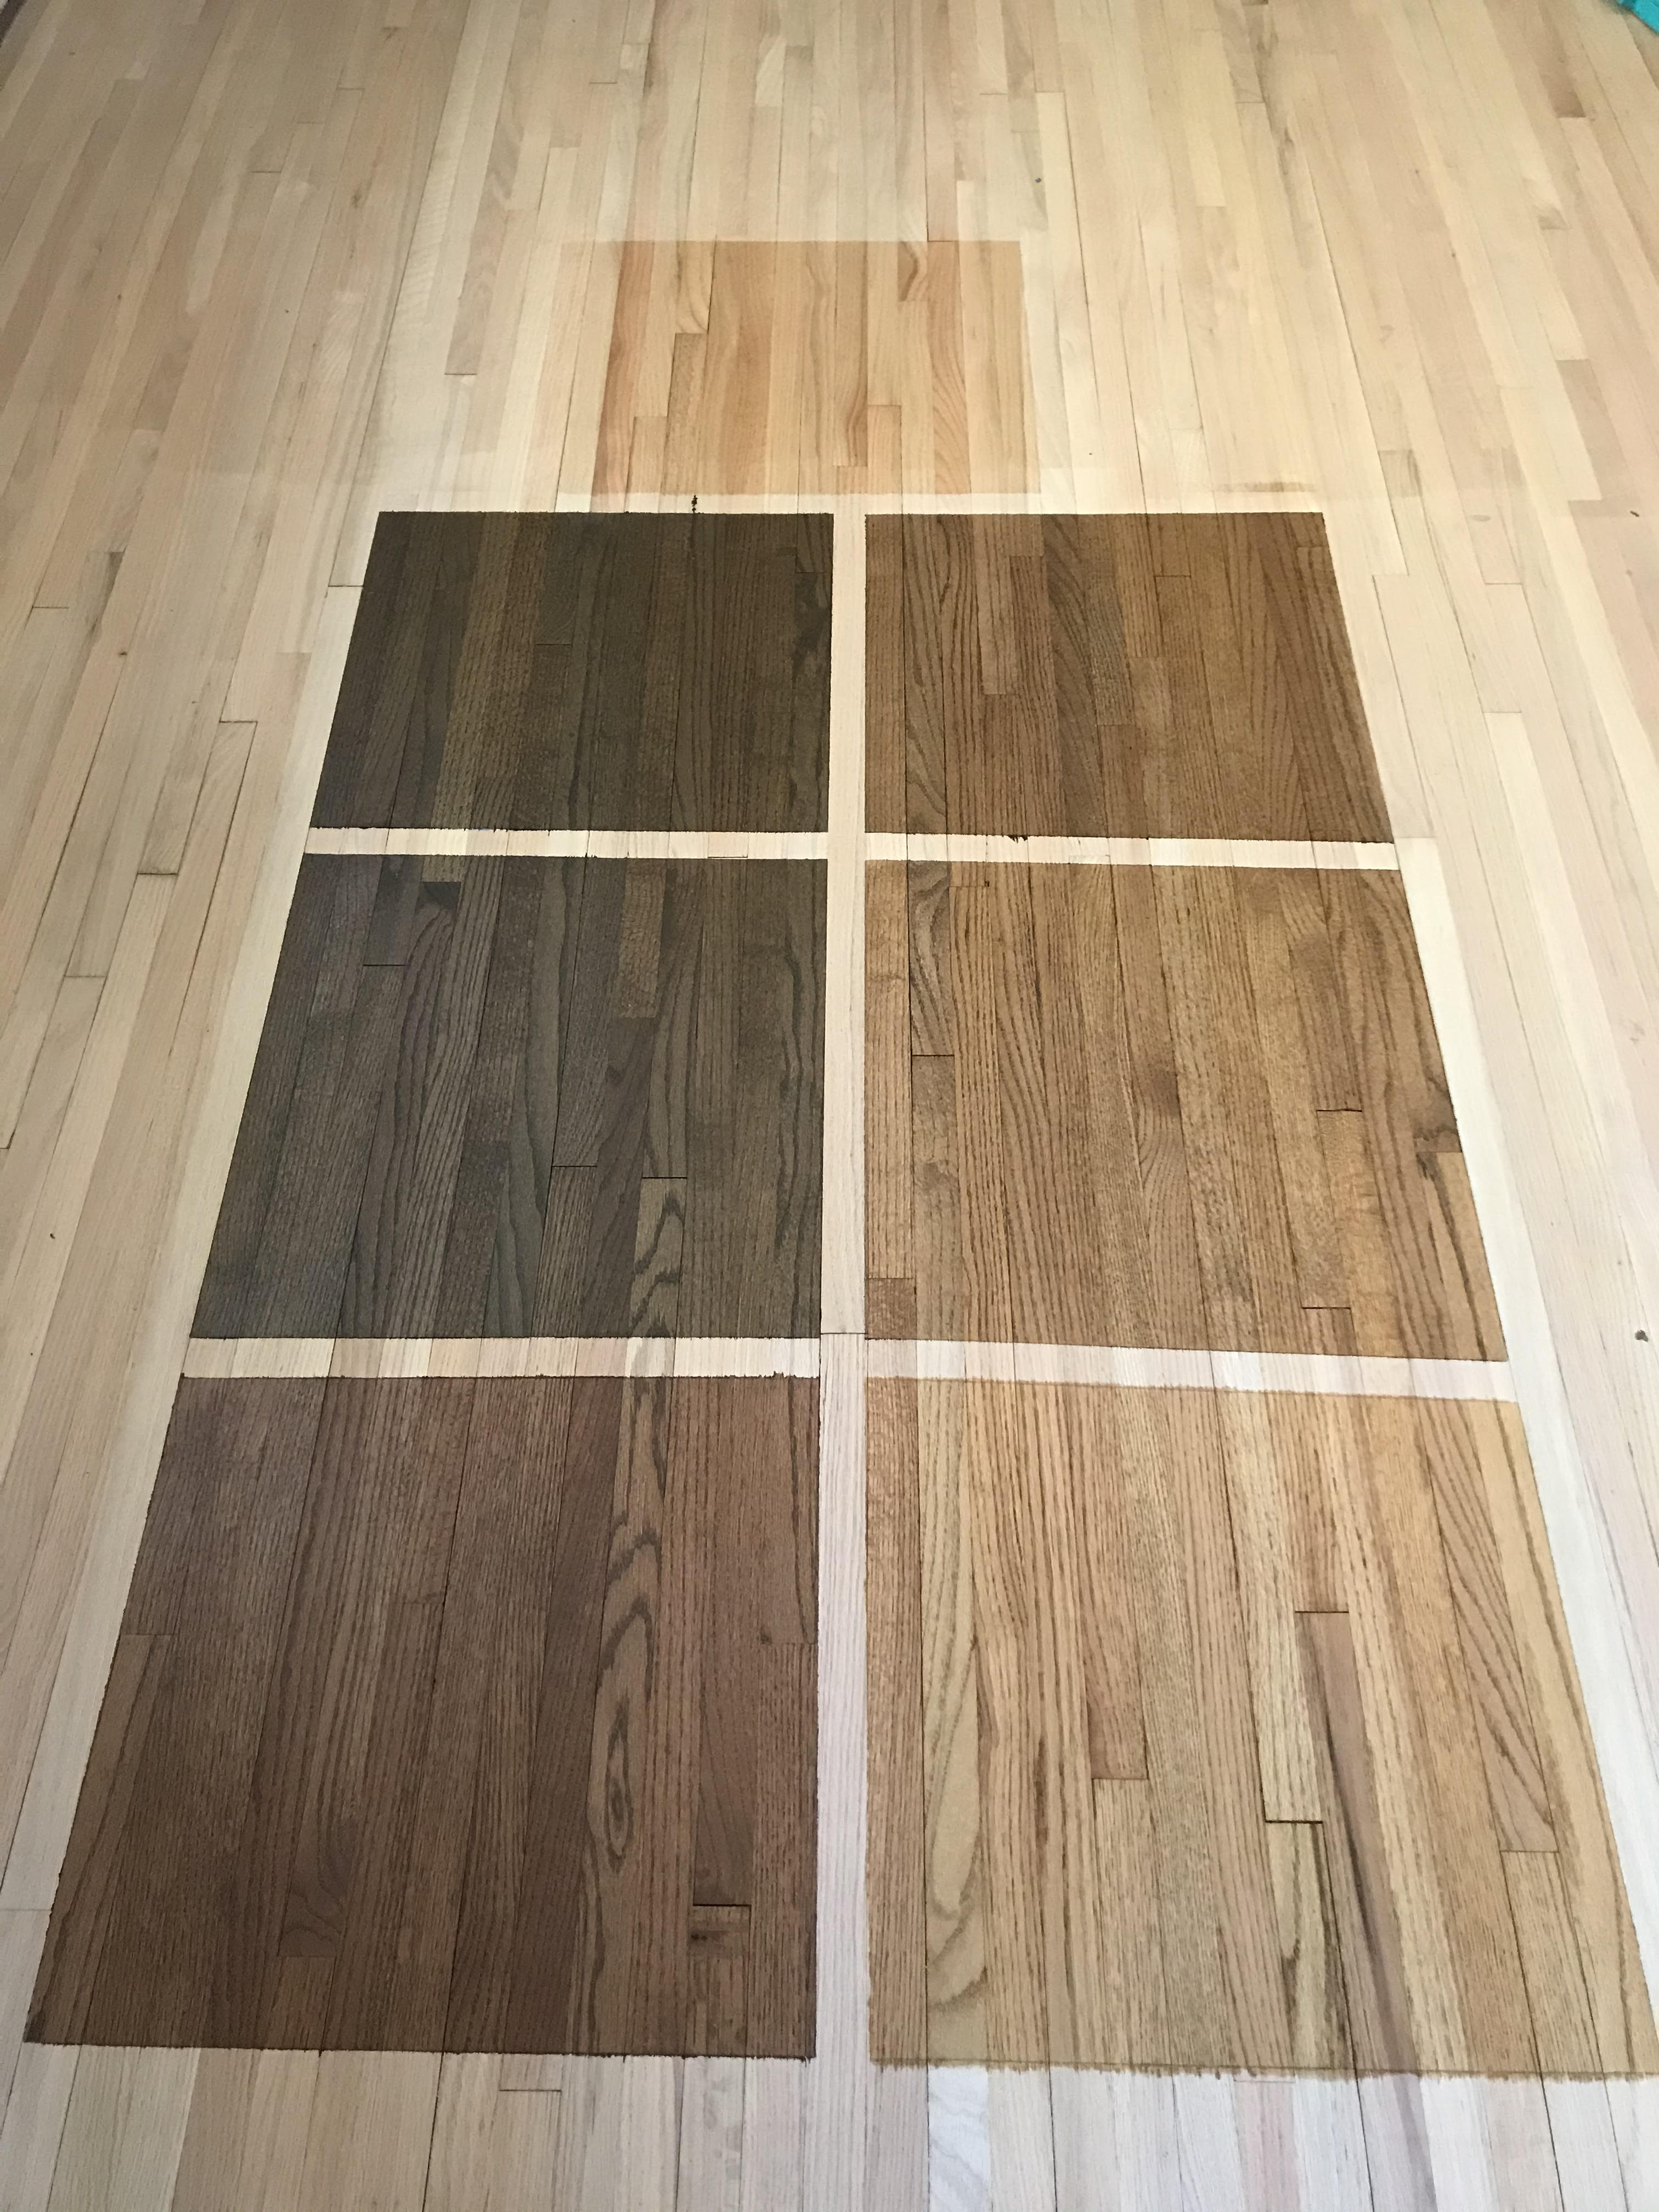 Hardwood Floor Refinishing Ub, Refinishing Hardwood Floors Jacksonville Fl